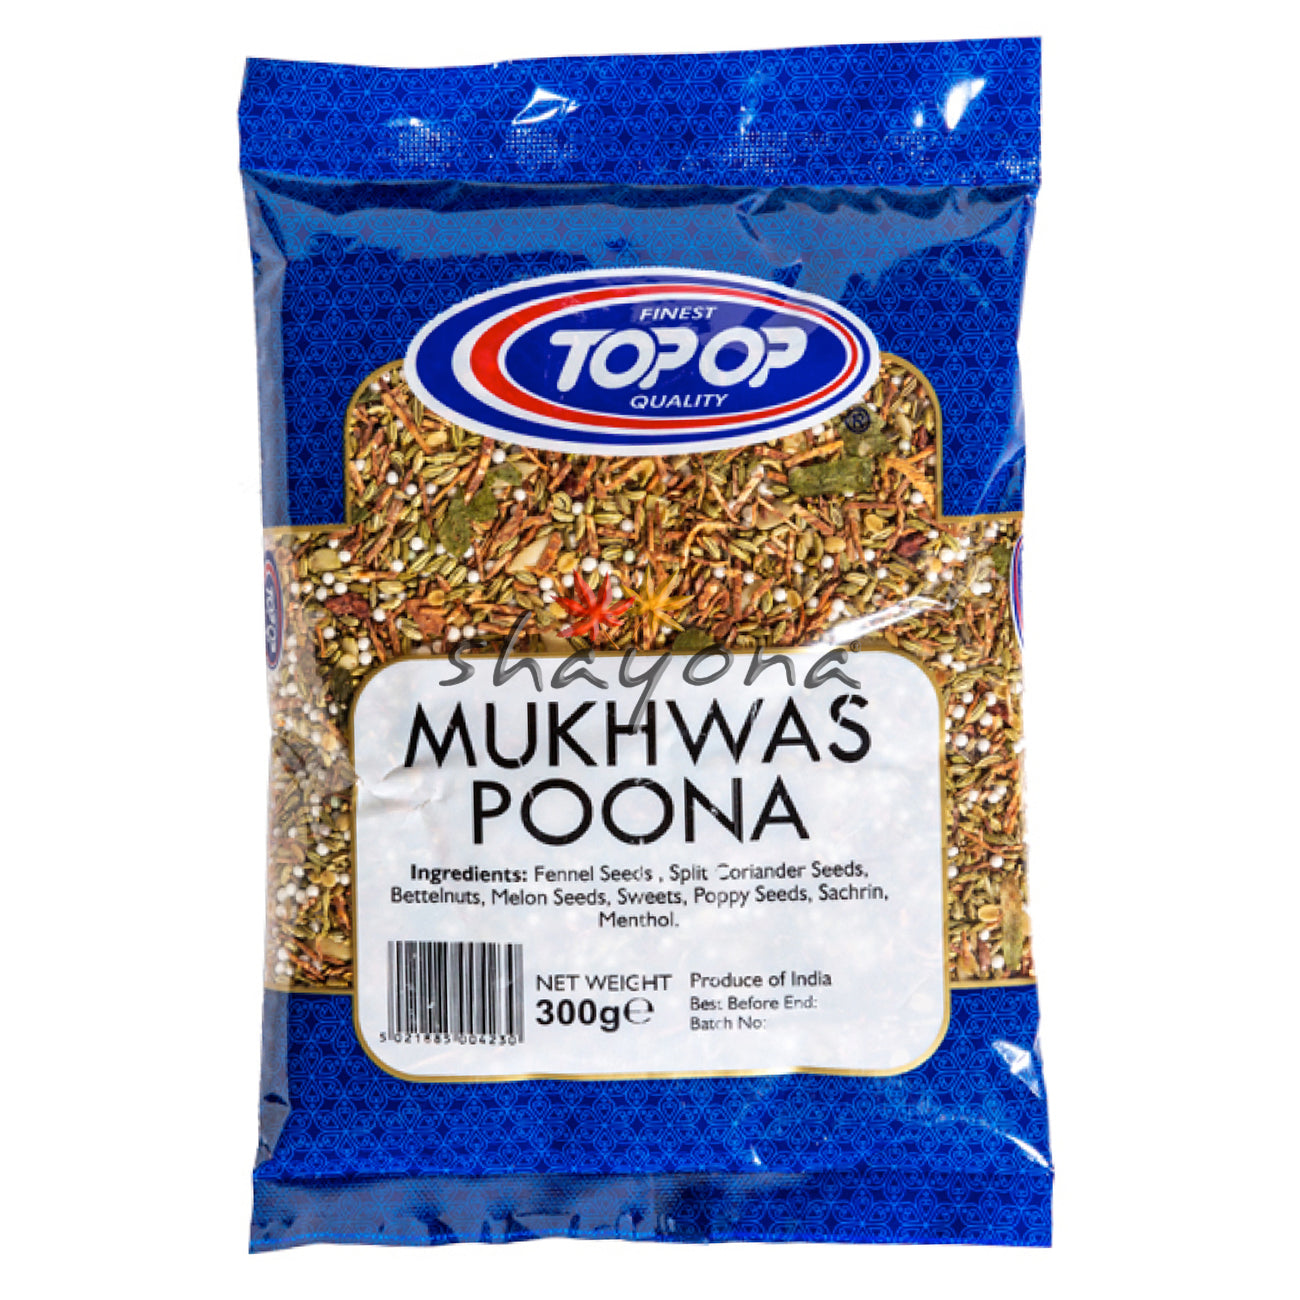 TopOp Mukhwas Poona